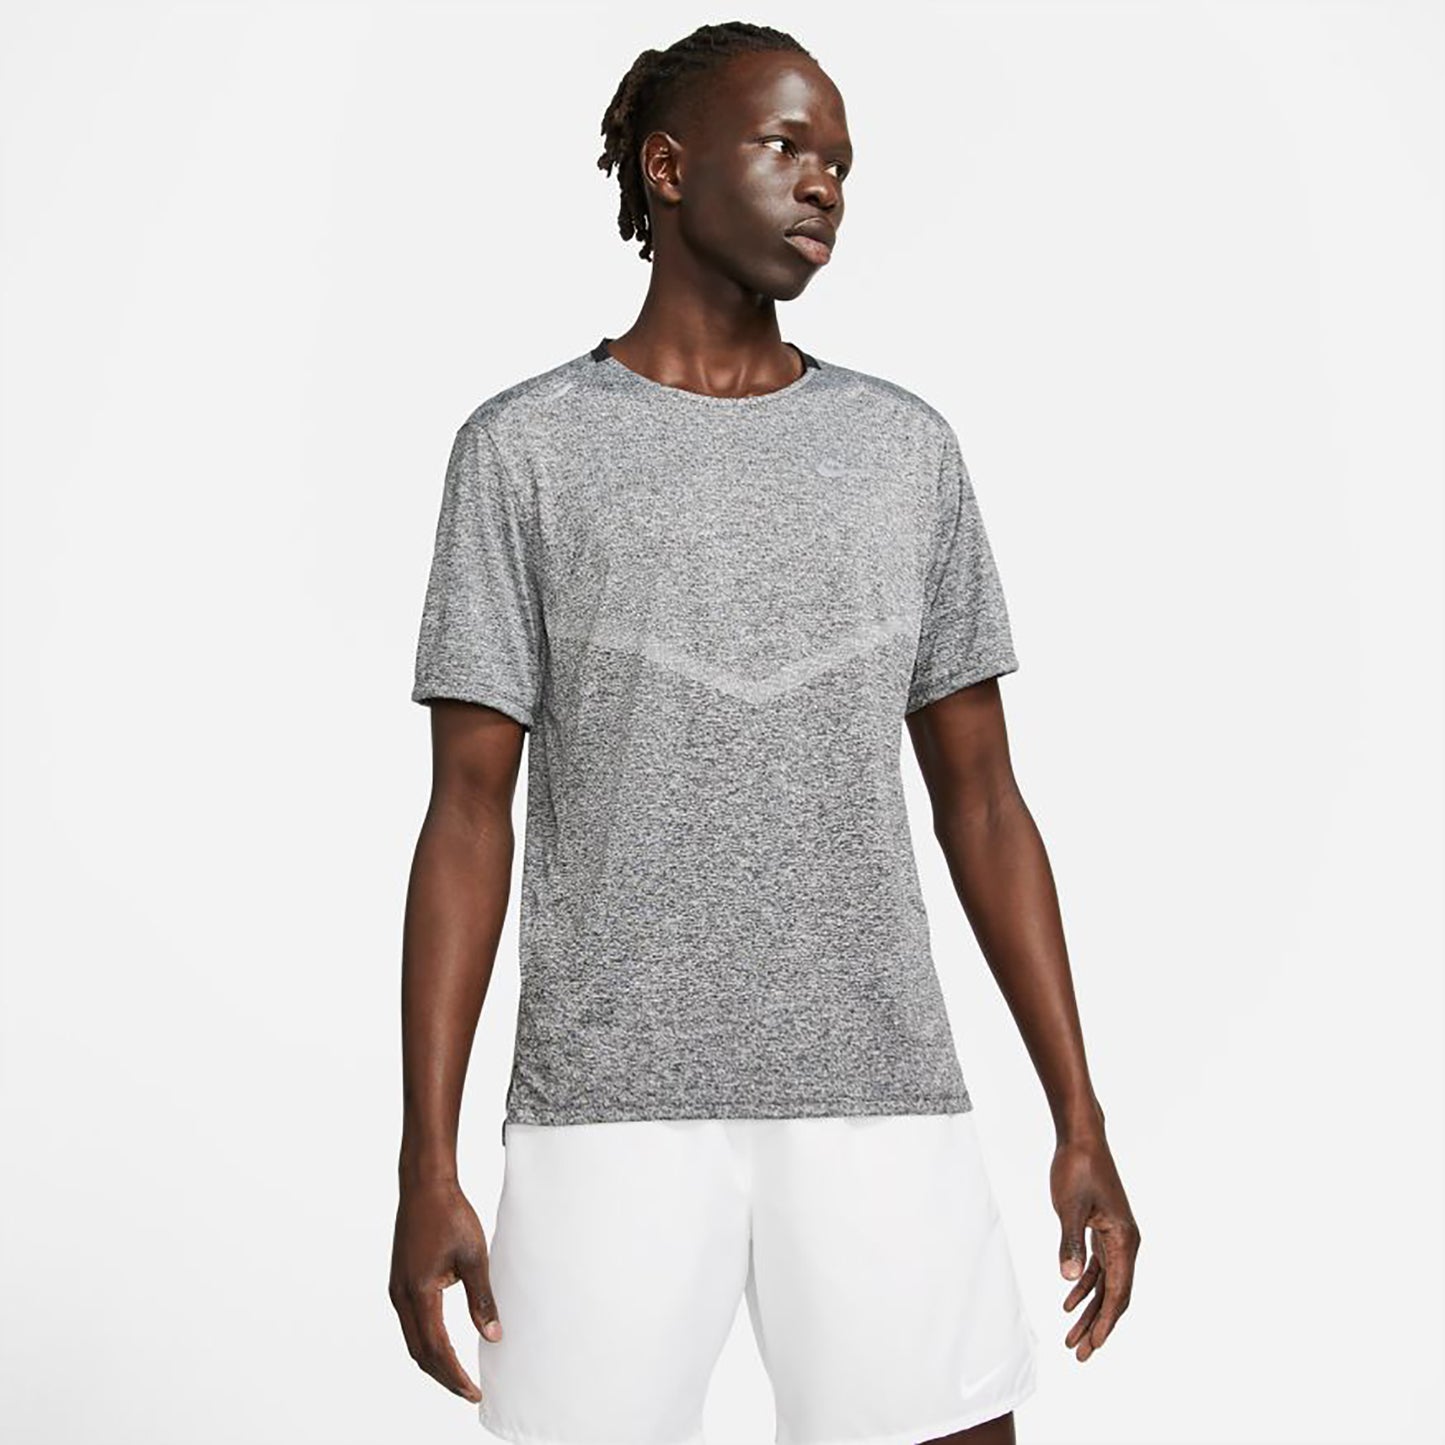 Men's Nike Dri-FIT Rise 365 Short Sleeve Running Top - Black